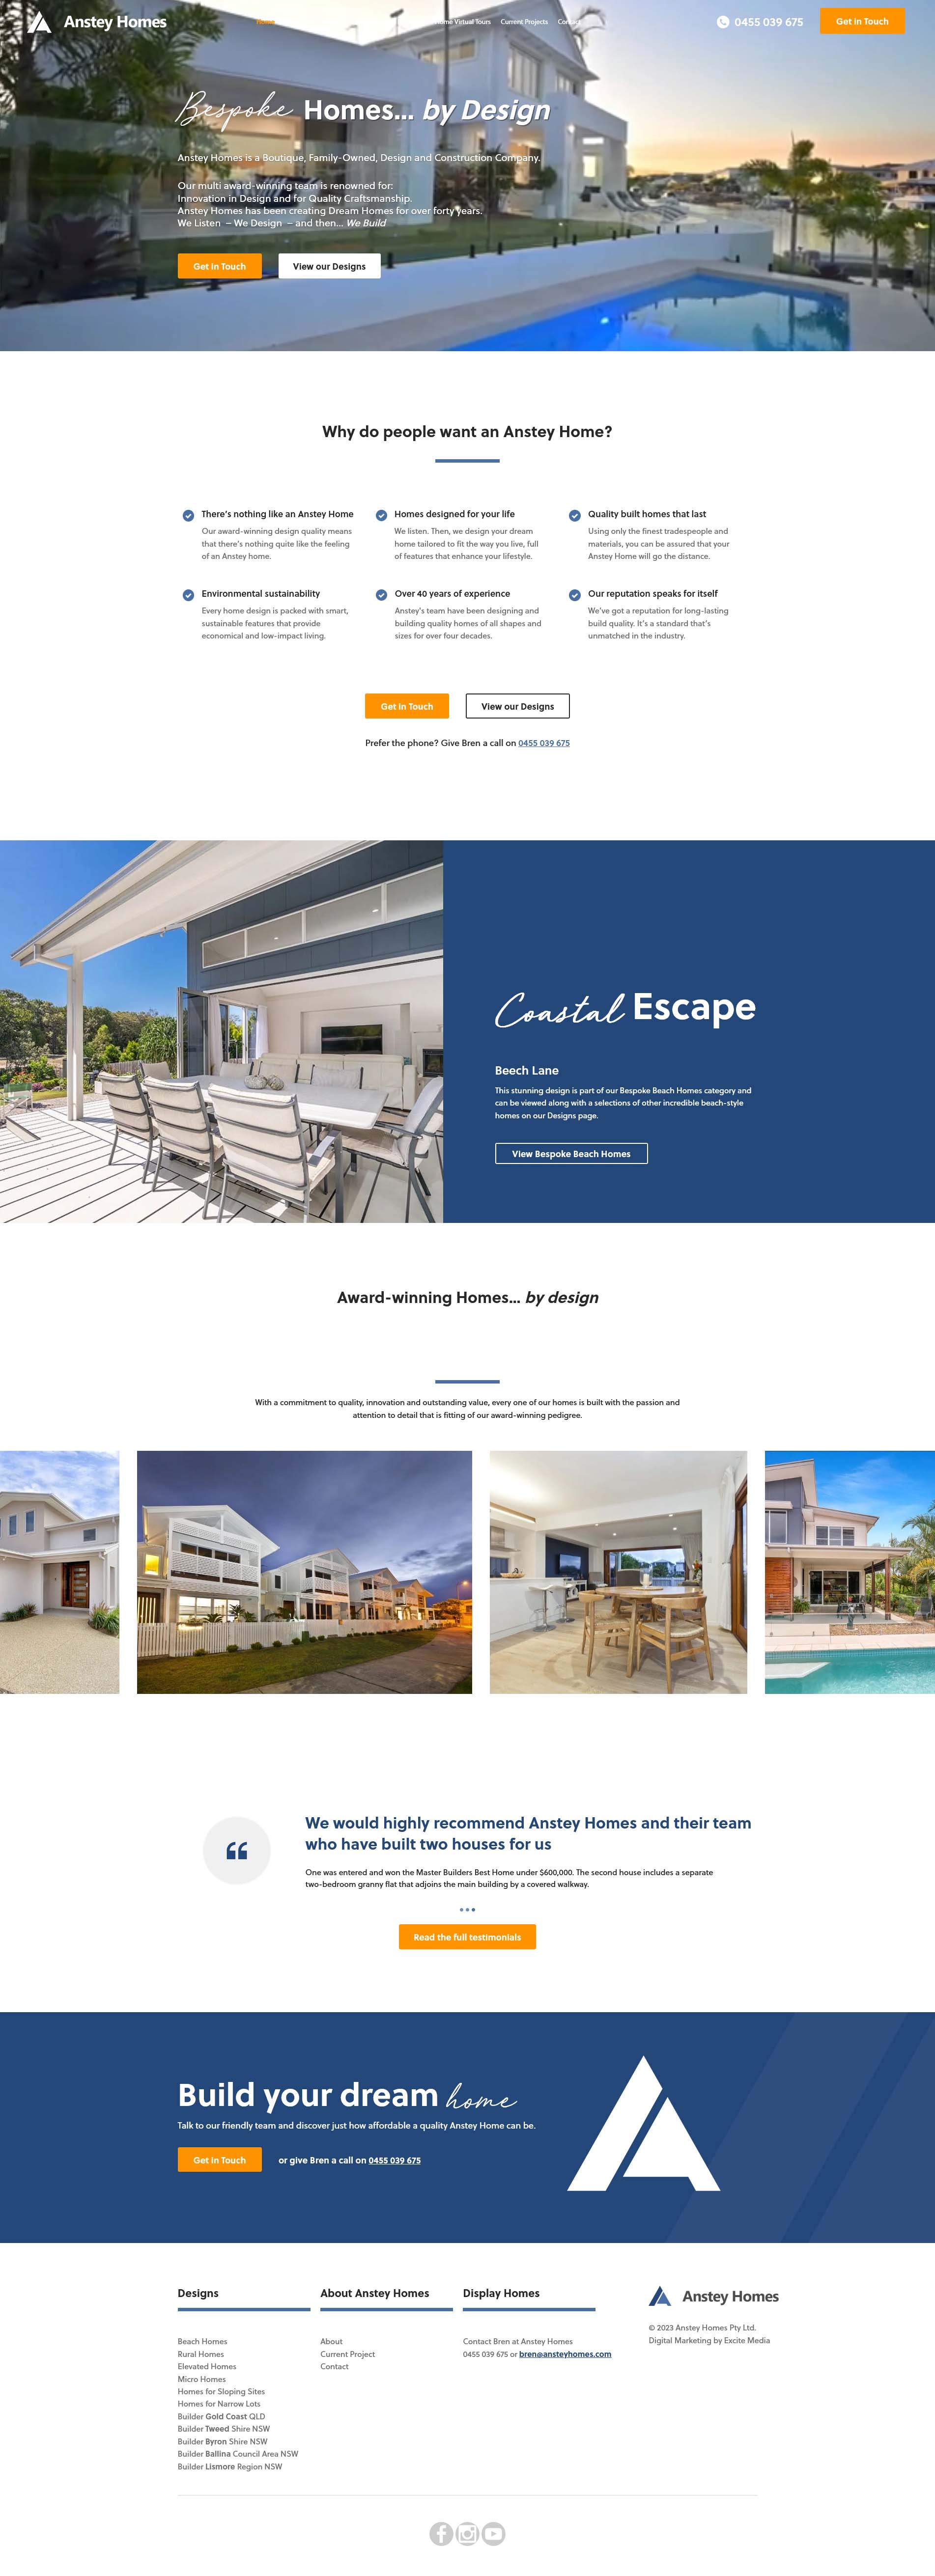 Anstey Homes homepage design